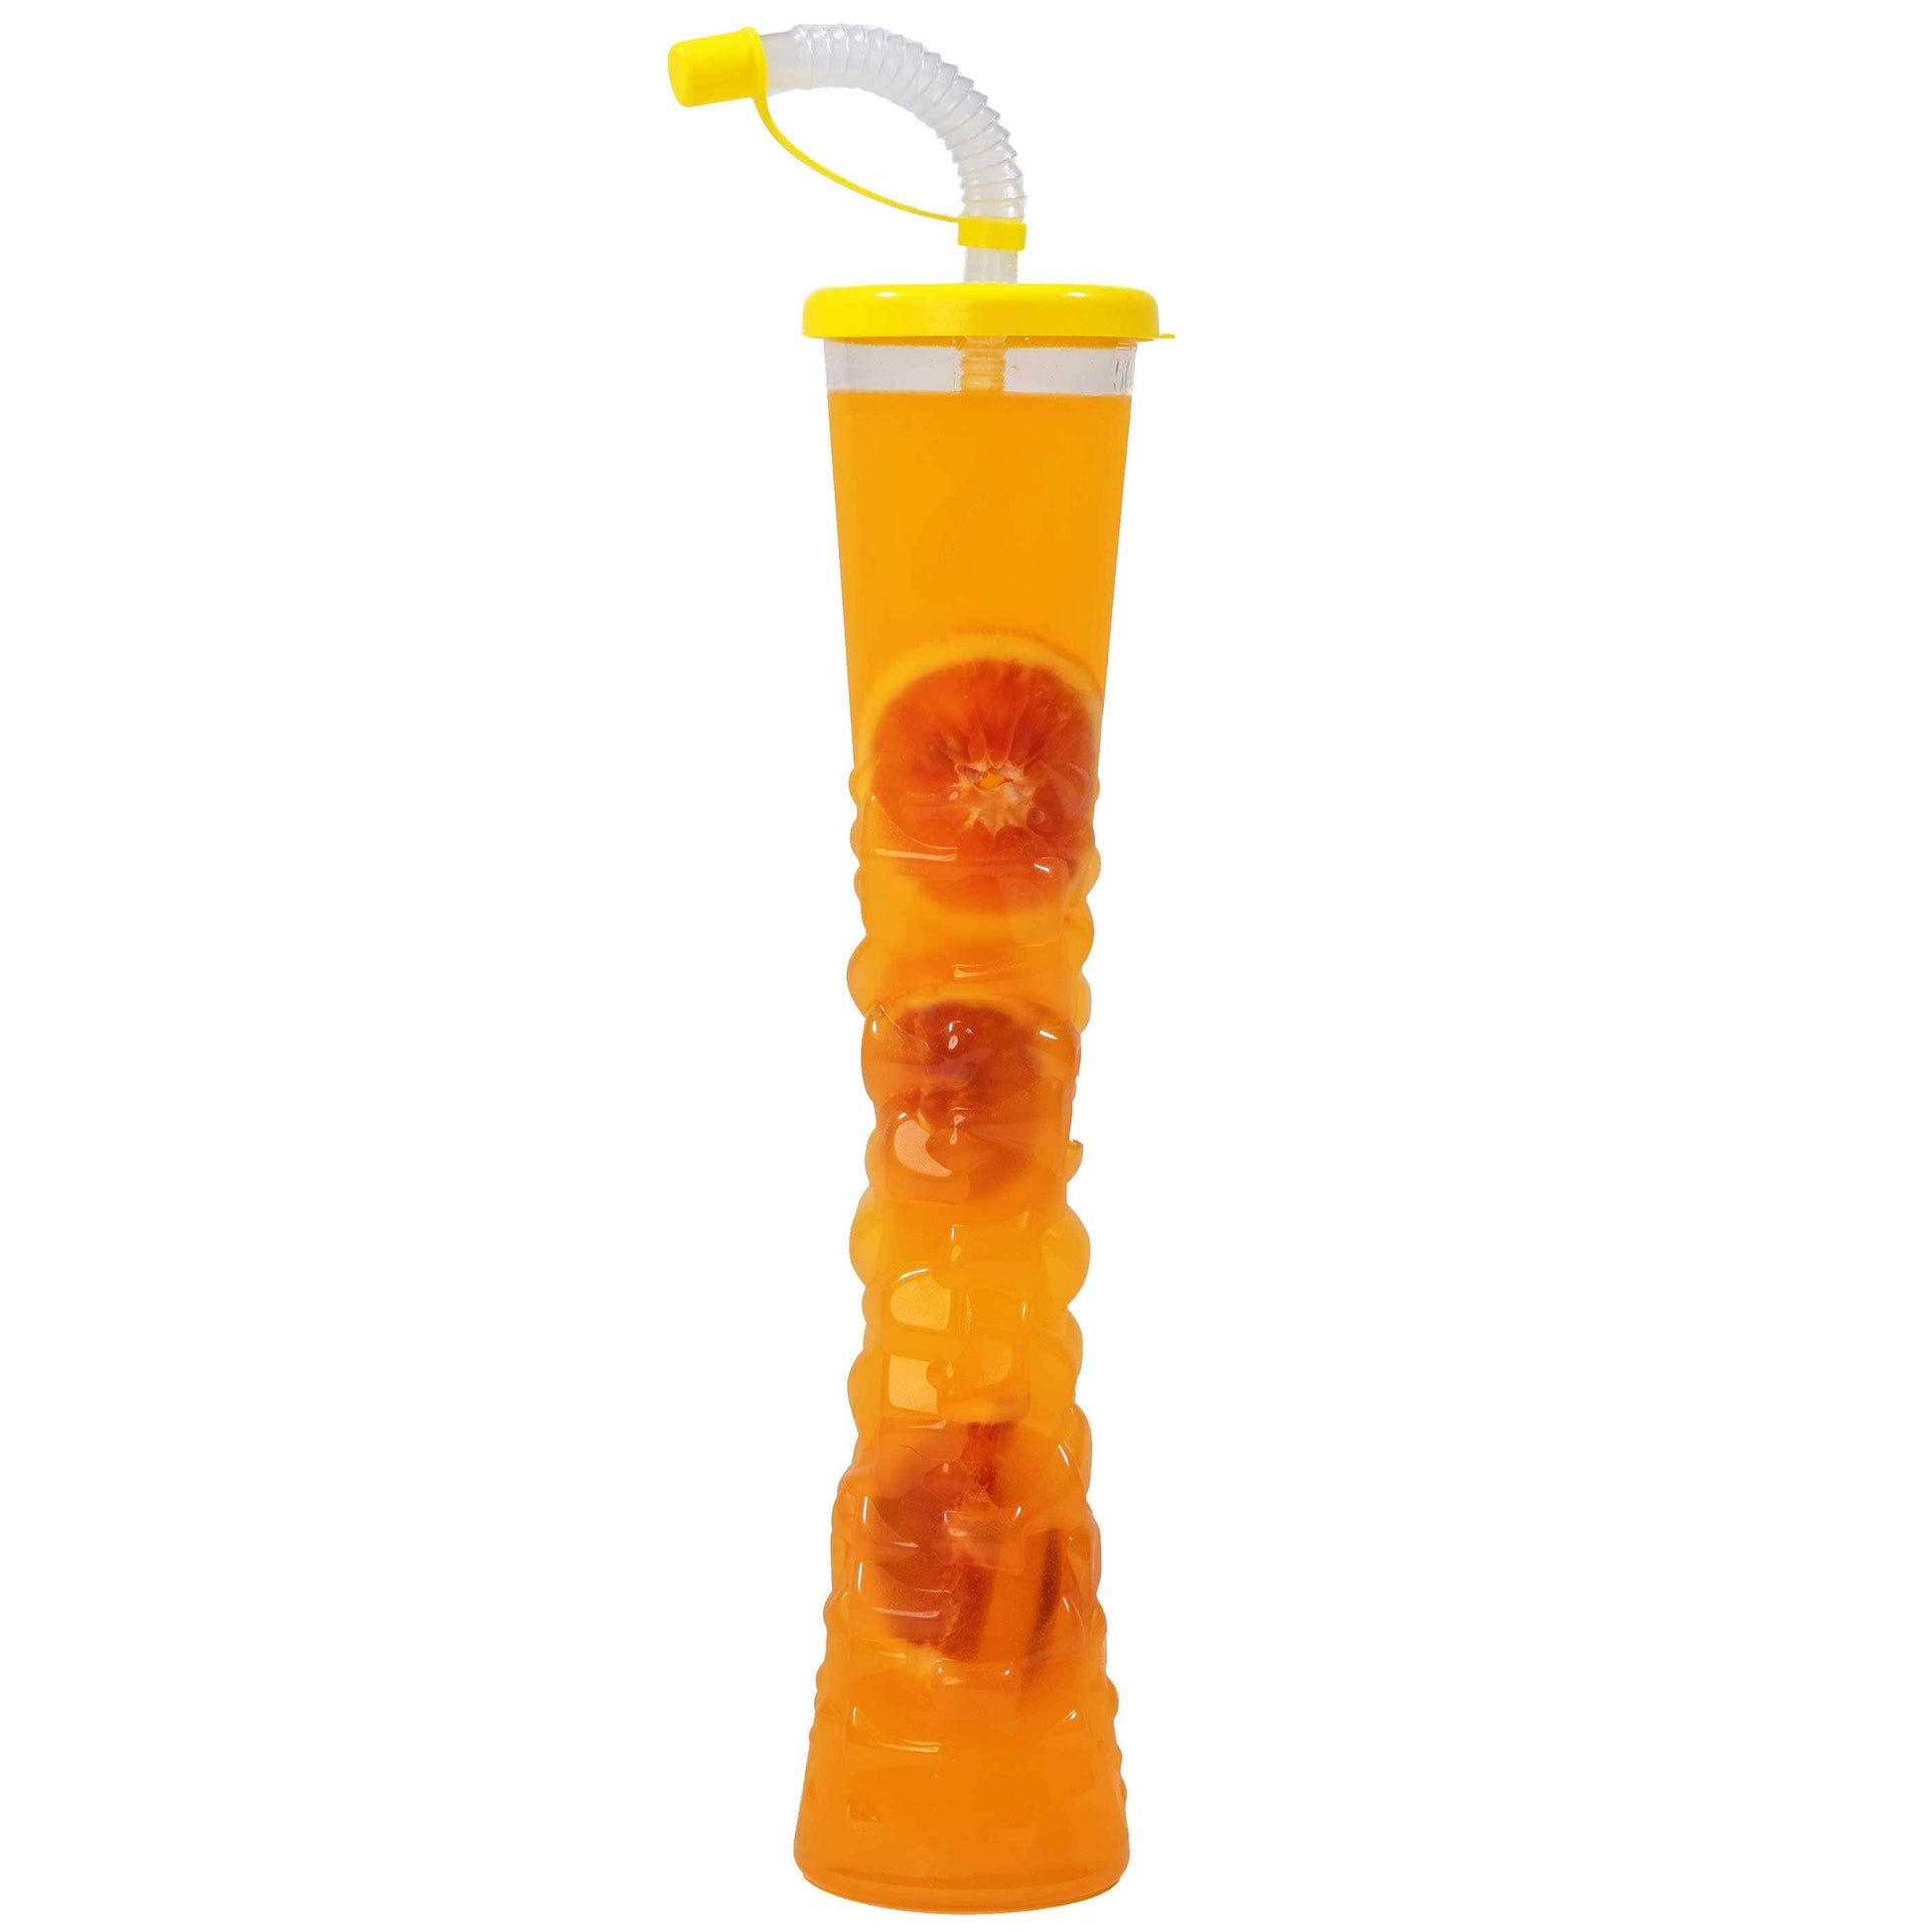 Ice Yard Cups (54 Cups - Orange) - for Margaritas and Frozen Drinks Kids Parties - 17oz. (500ml)